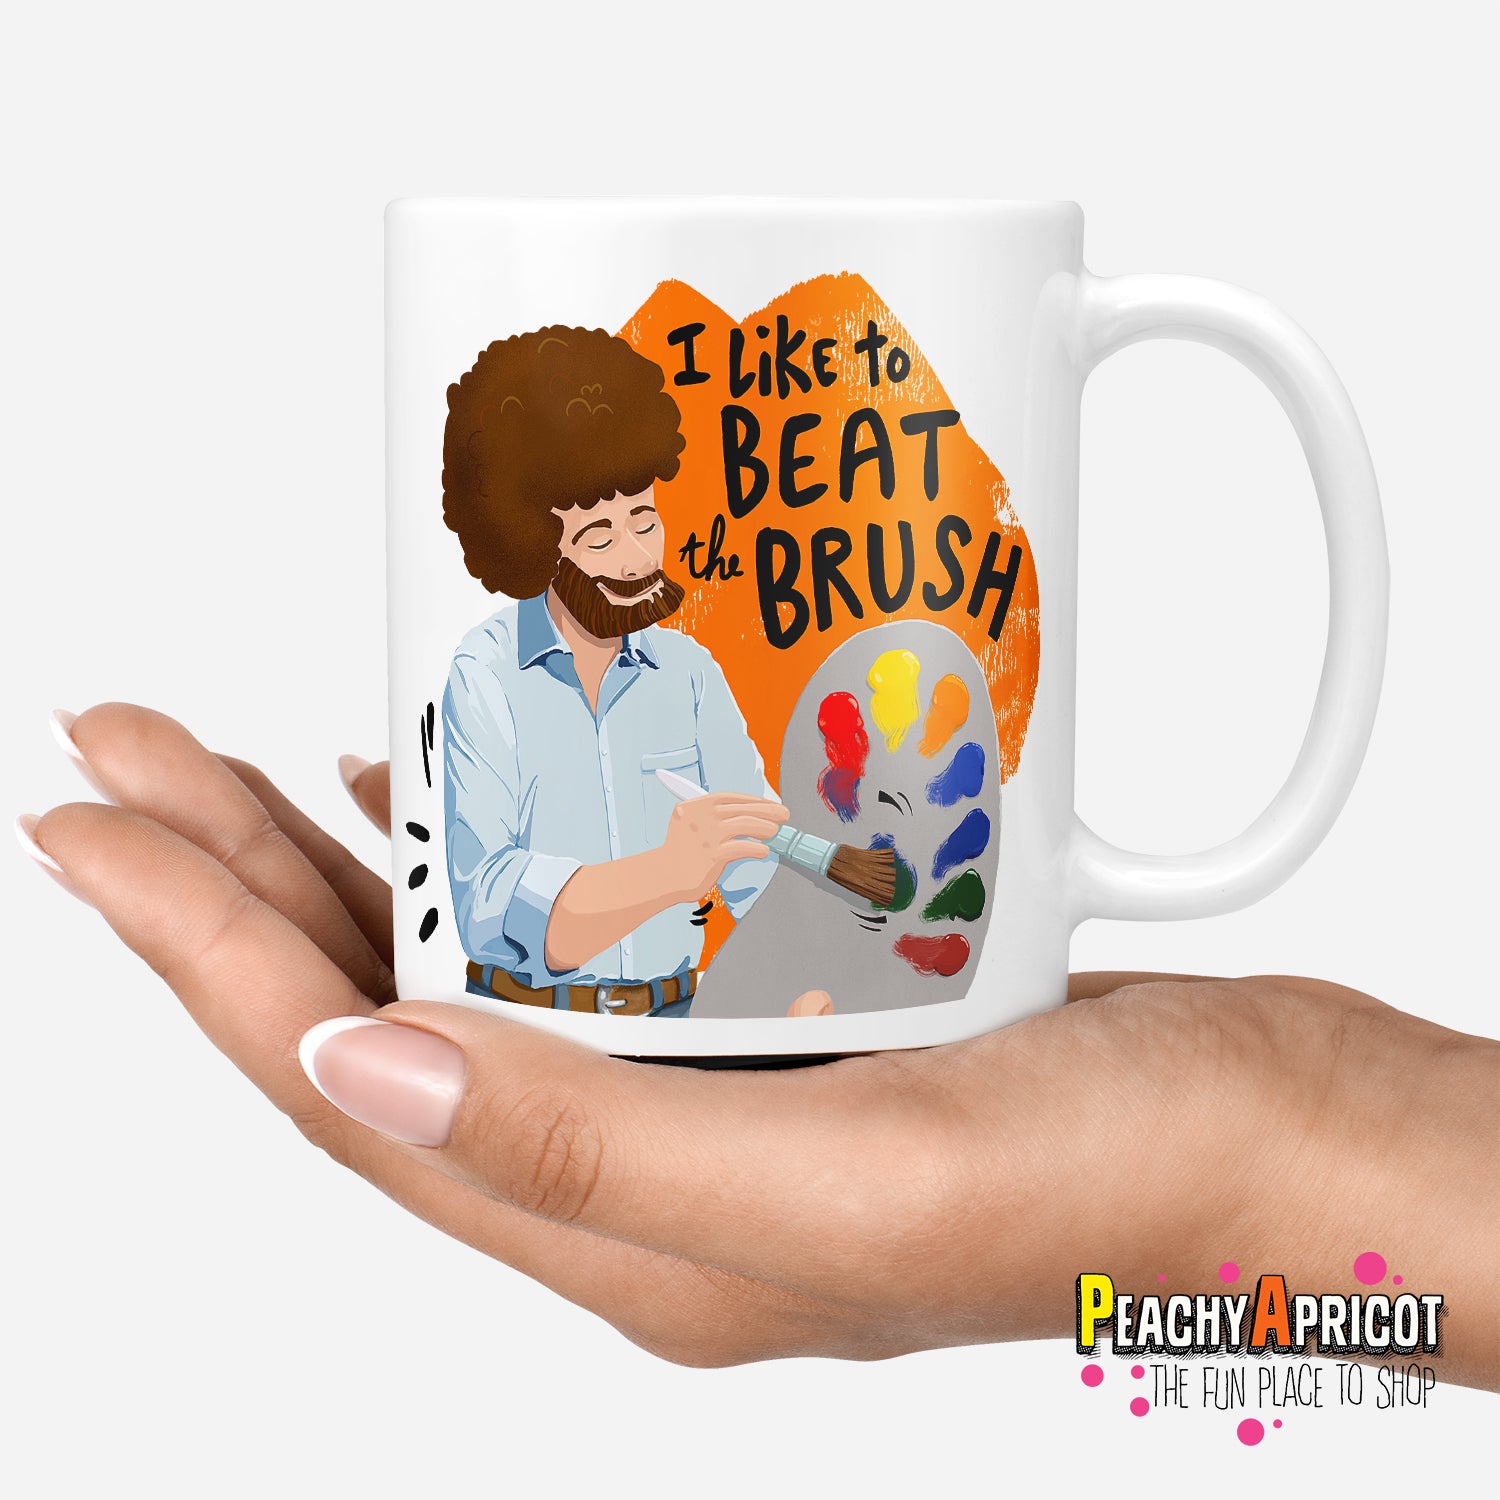 Bob Ross - Beat the Devil Mug - PeachyApricot